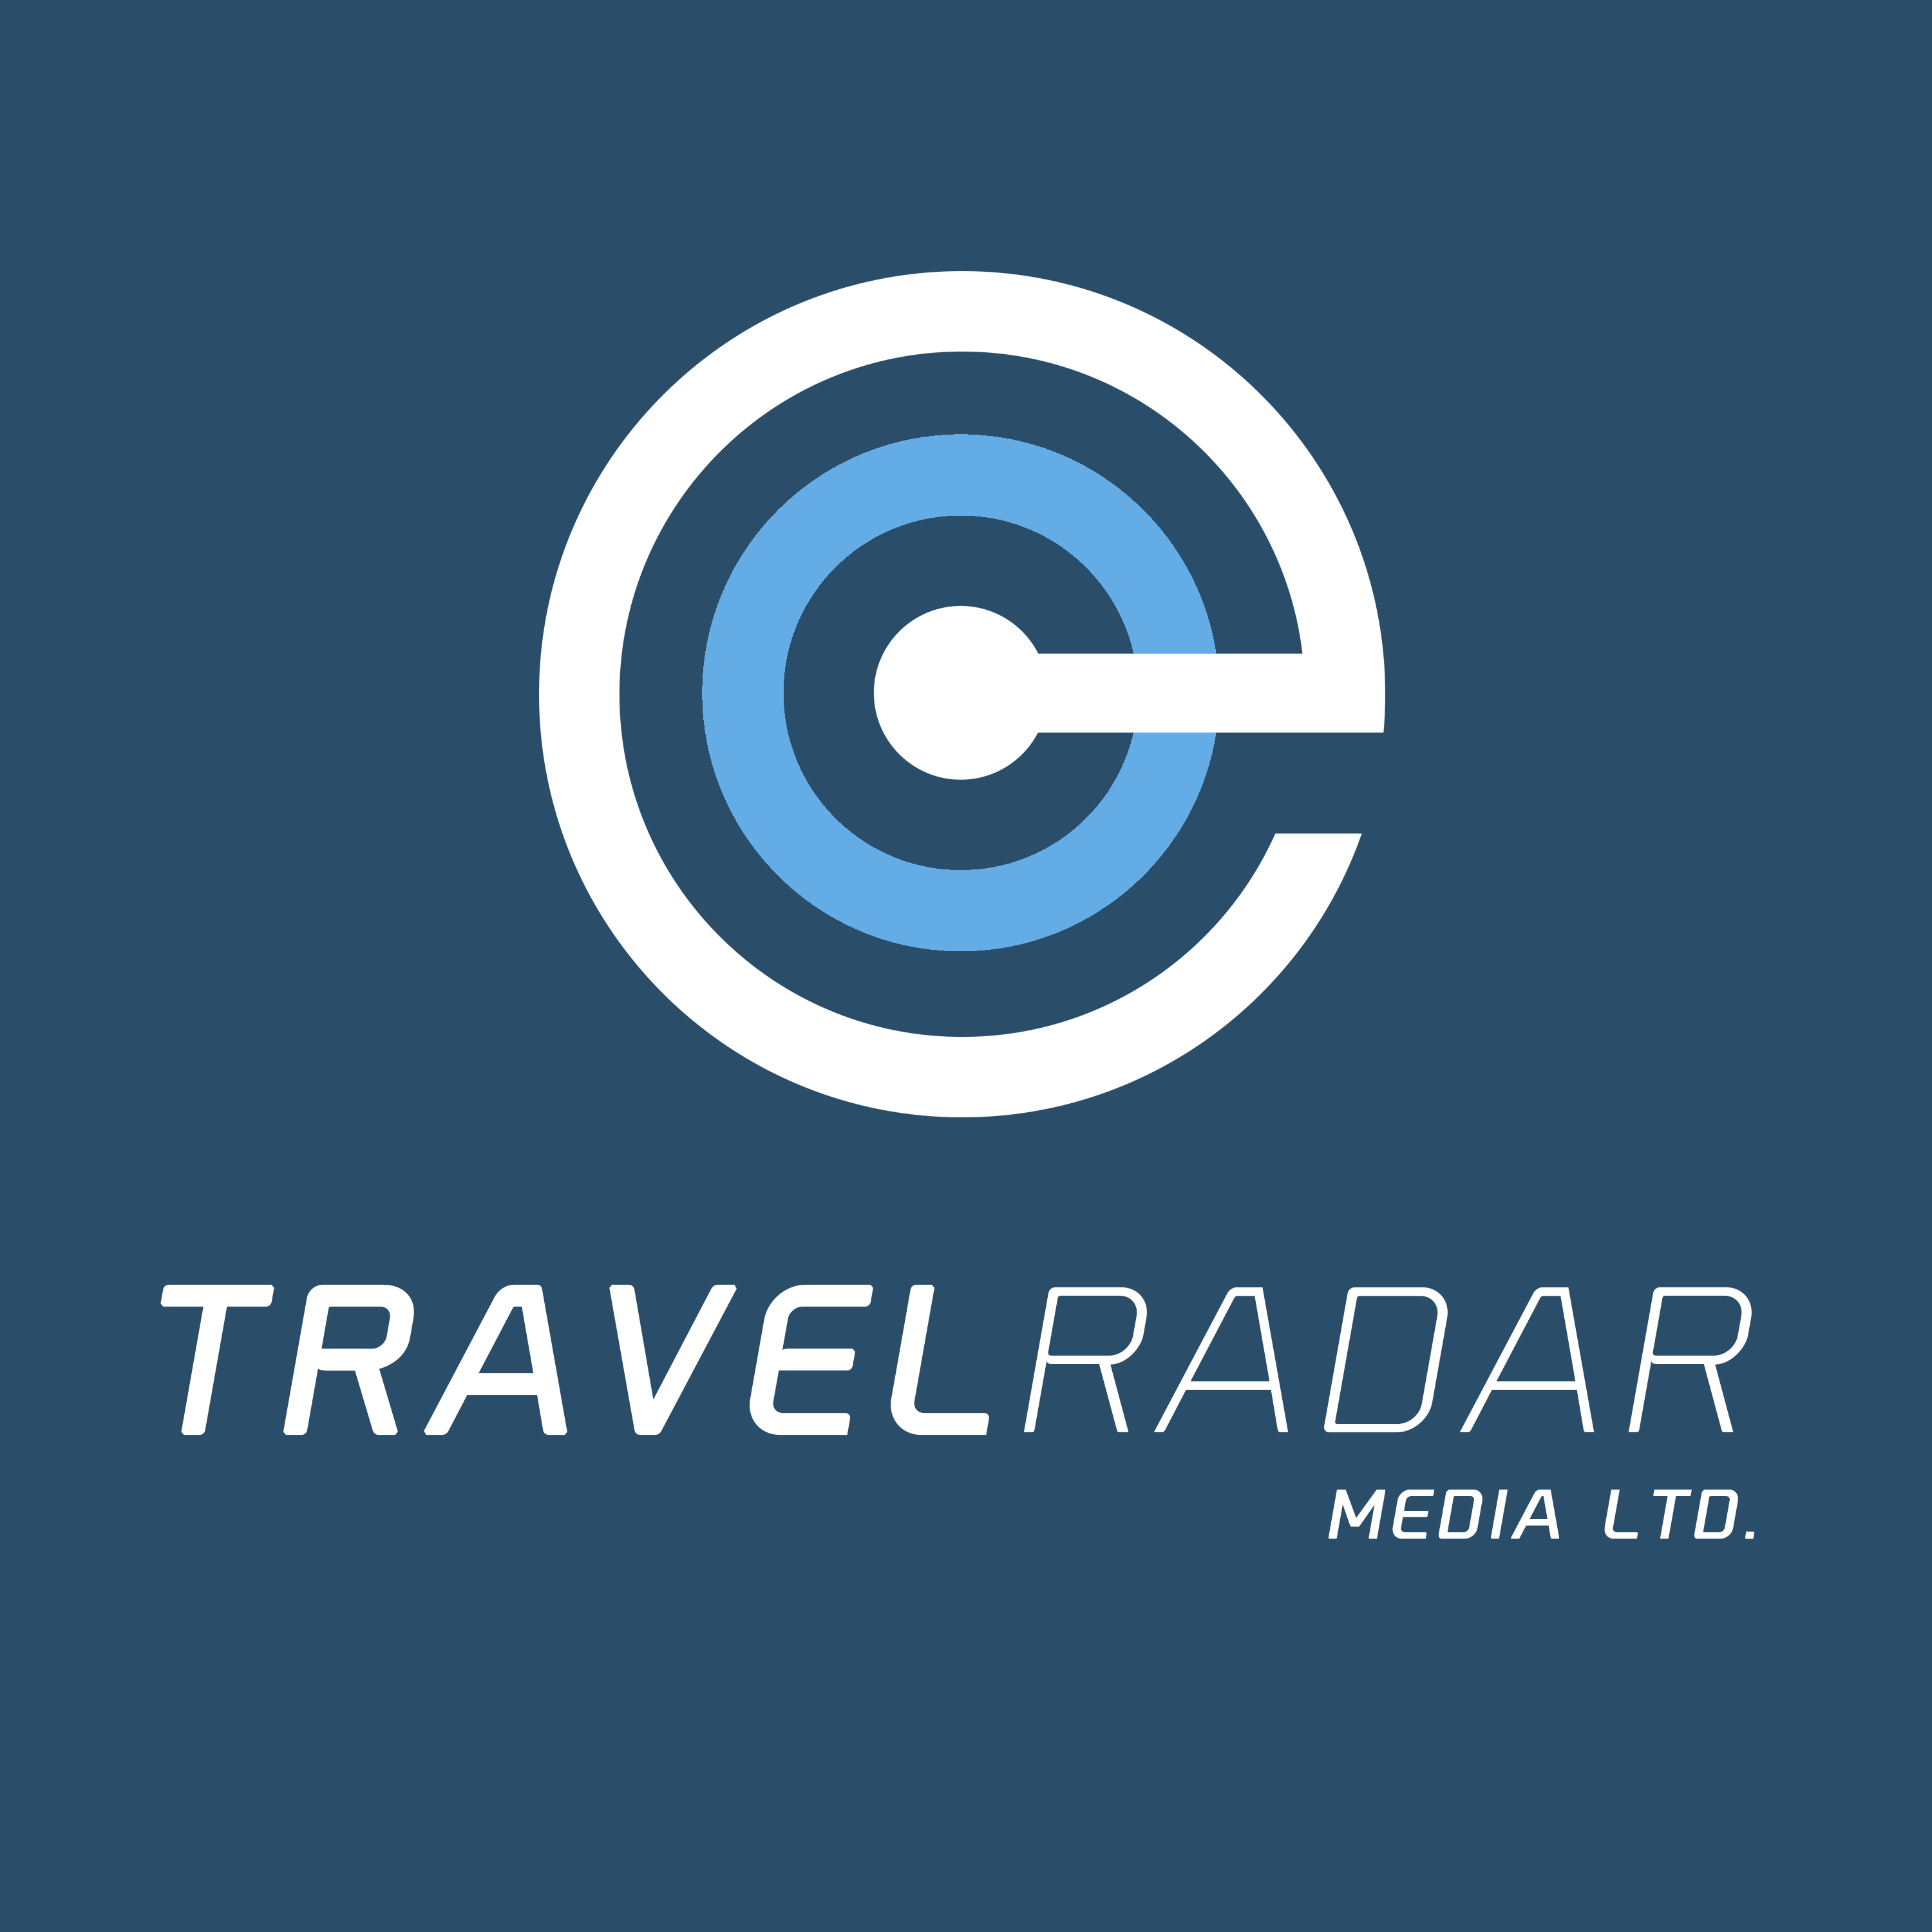 Blue Radar Logo - Travel Radar Media Ltd. Company Logo.png